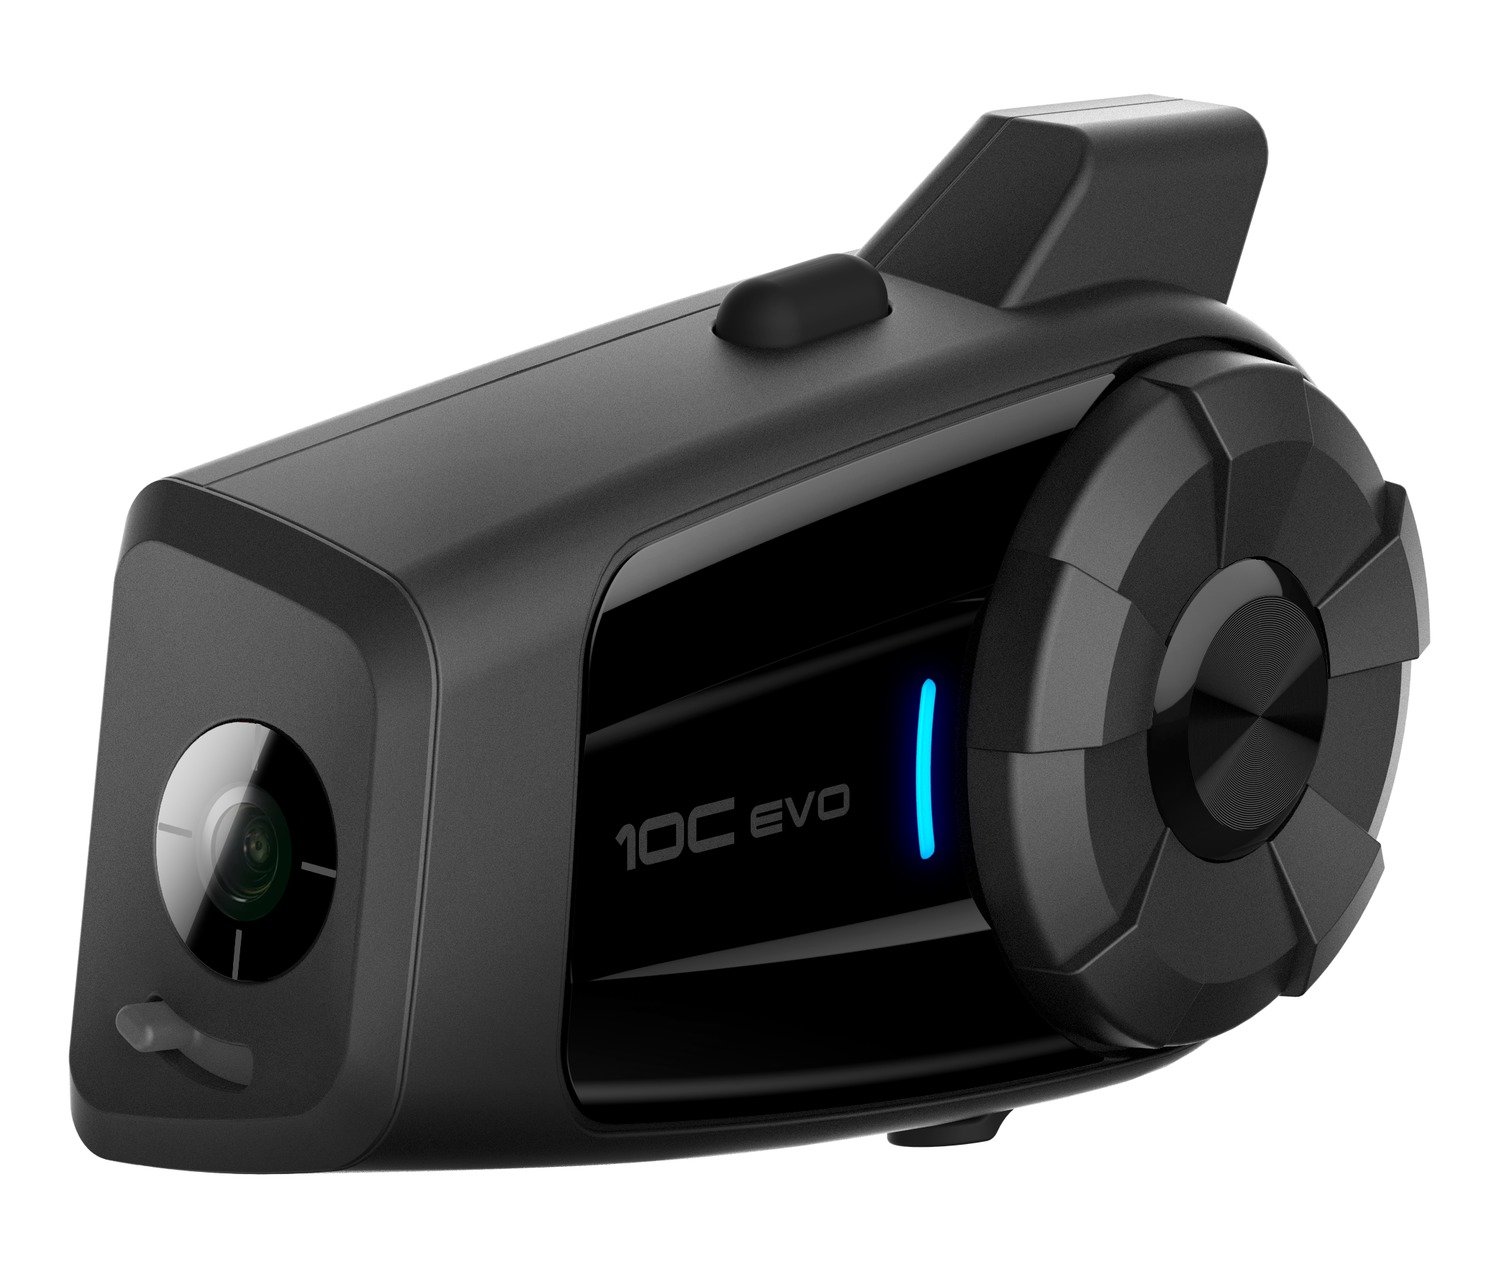 Obrázek produktu Bluetooth handsfree headset 10C EVO s integrovanou 4K kamerou (dosah 1,6 km), SENA 10C-EVO-02